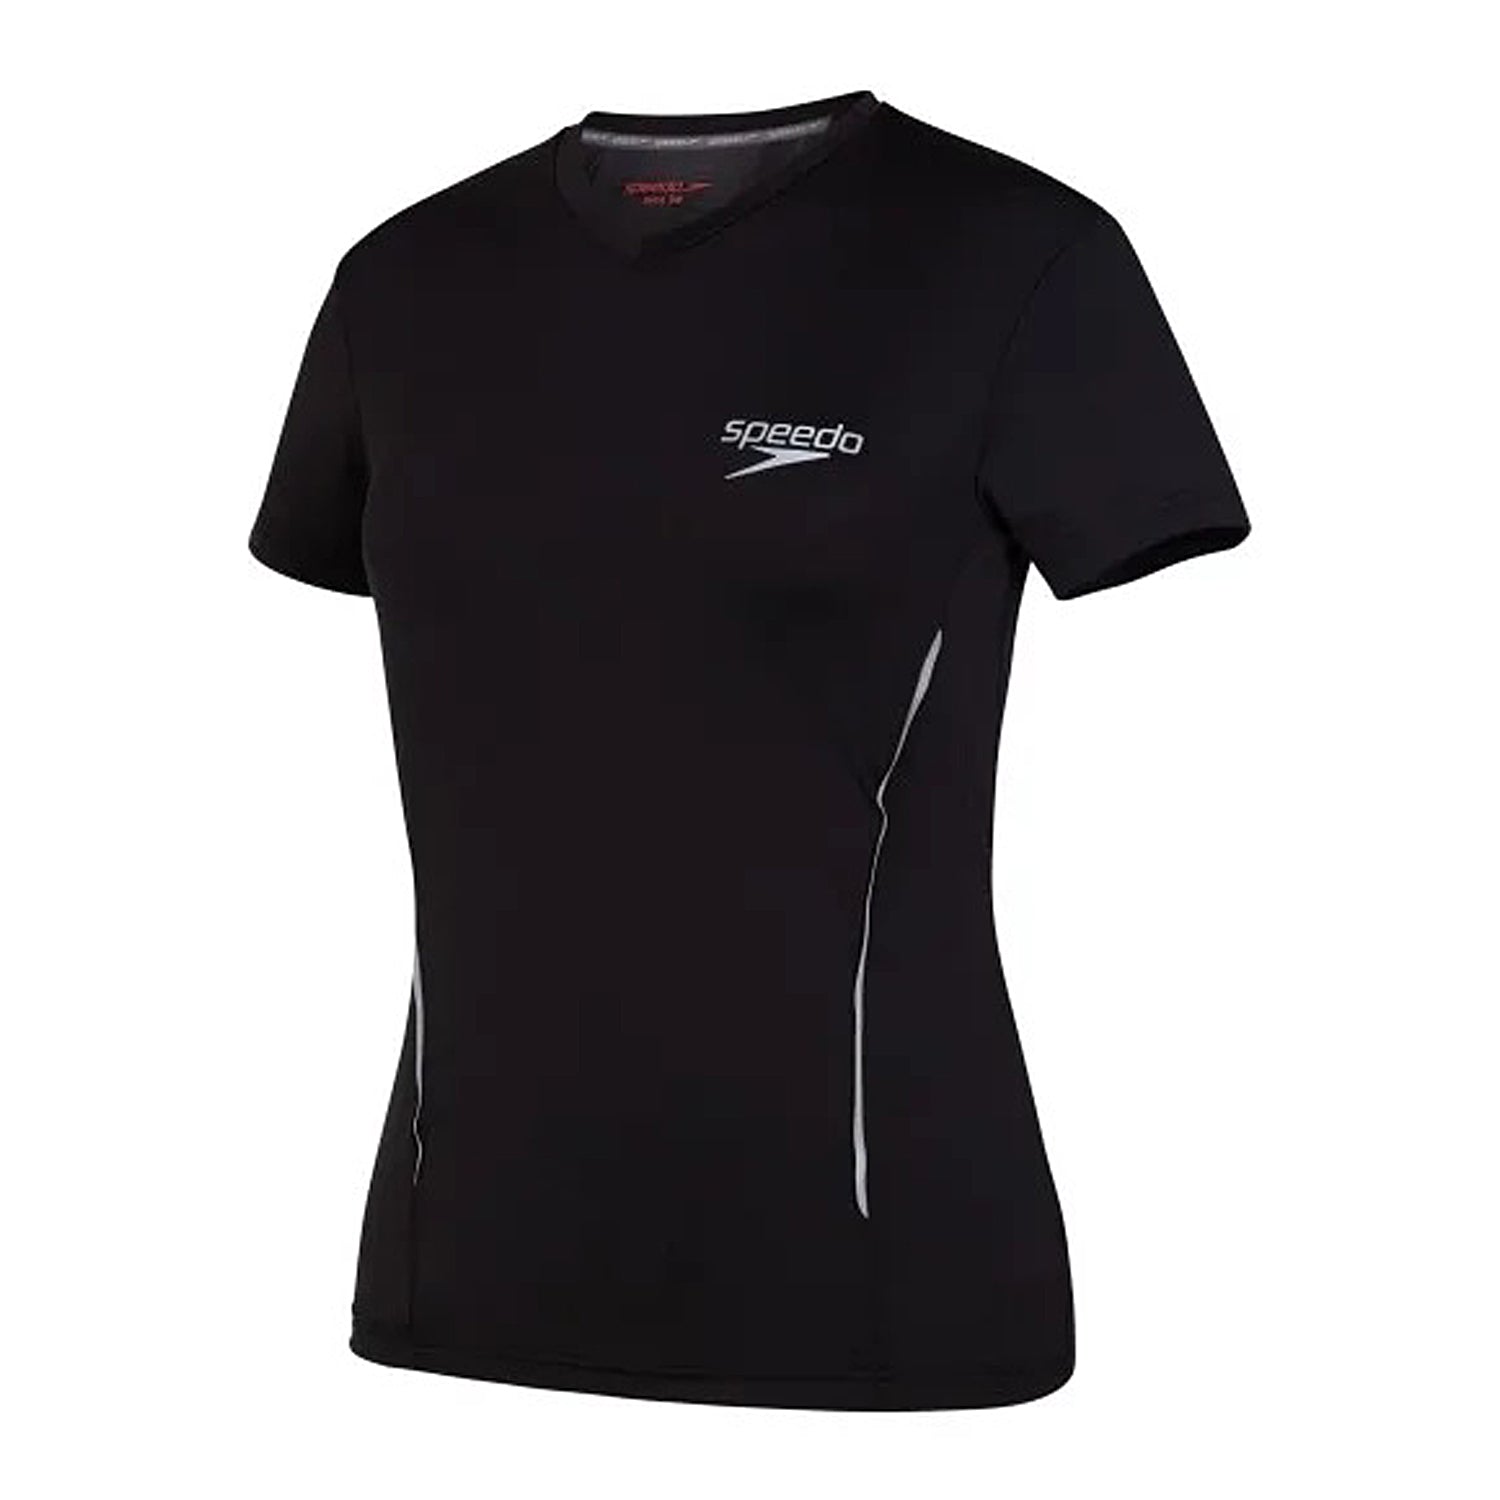 Speedo Short Sleeve Sun Top For Women (Black/Silver) - Best Price online Prokicksports.com